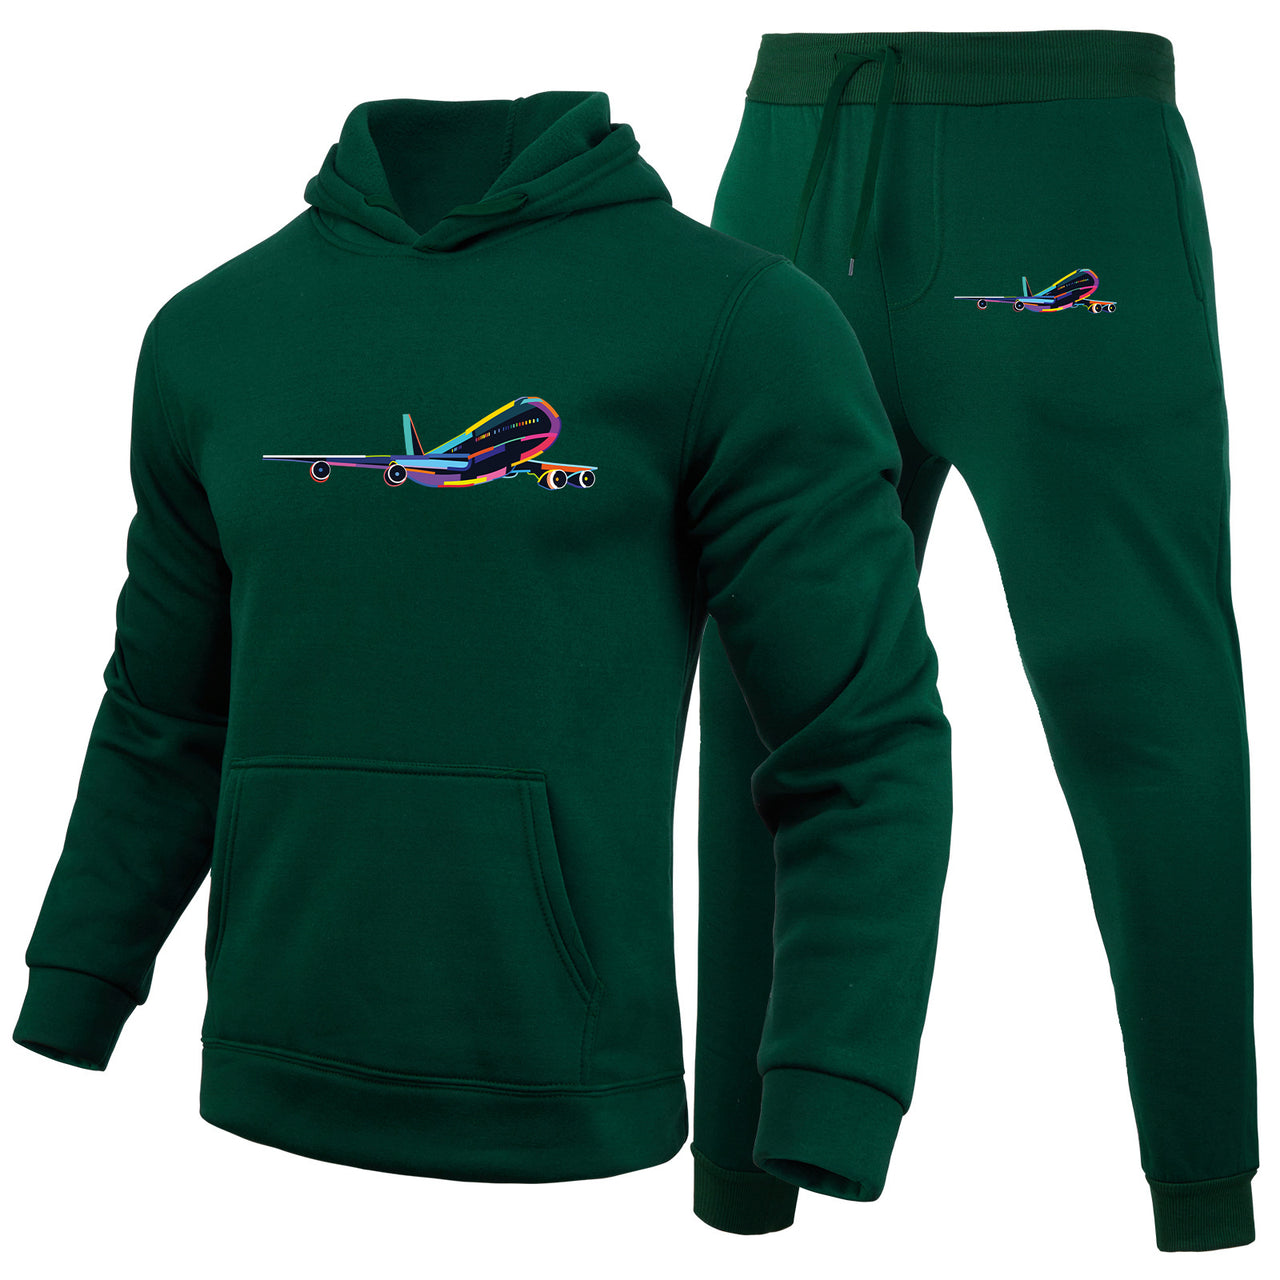 Multicolor Airplane Designed Hoodies & Sweatpants Set